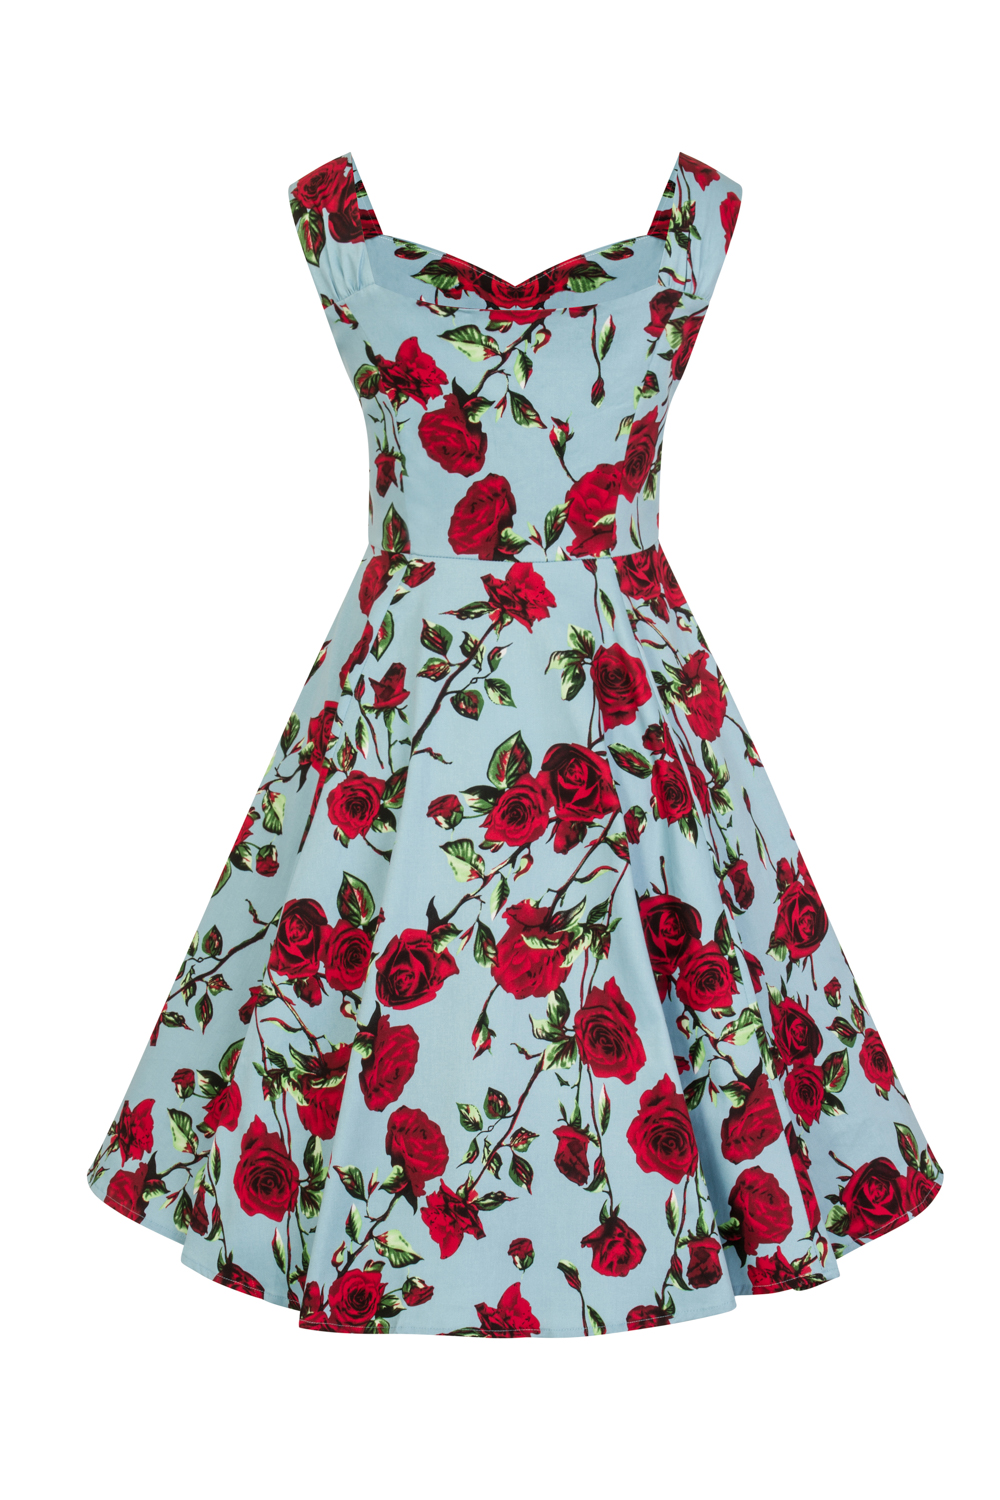 50s Ditsy Rose Floral Summer Dress in Blue